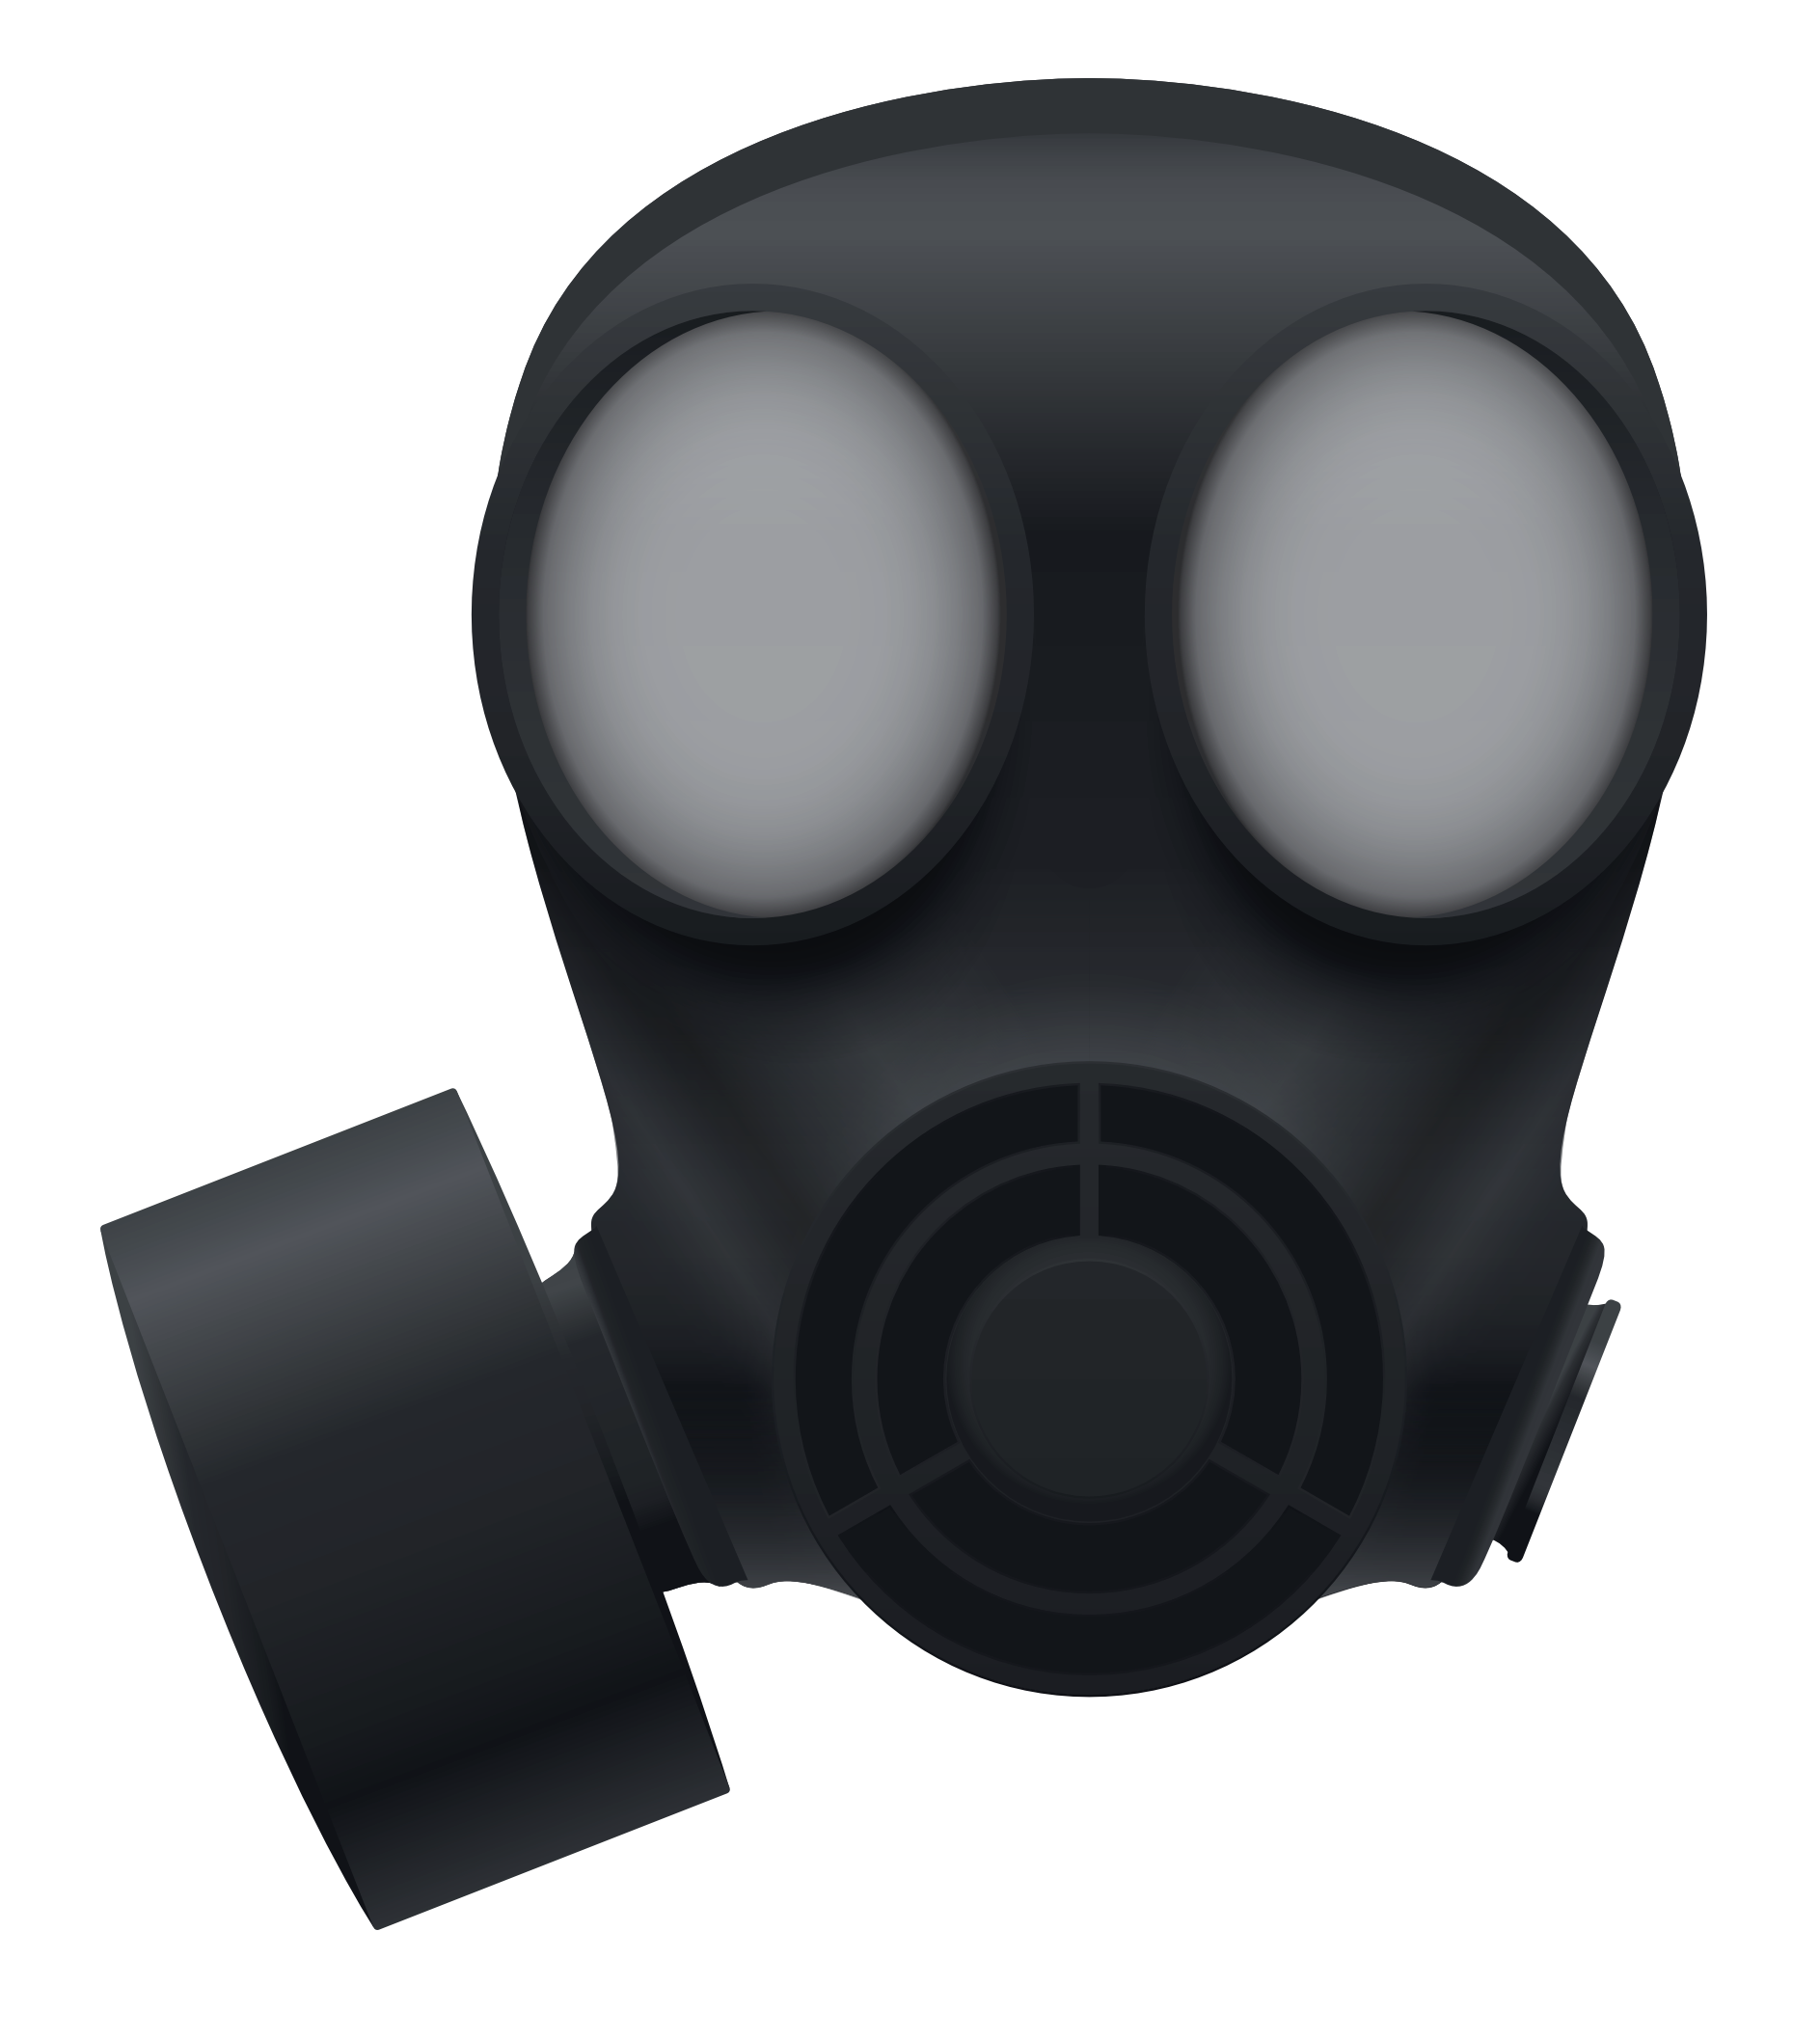 Gas Mask Vector Png Transparent Image - Mask, Transparent background PNG HD thumbnail